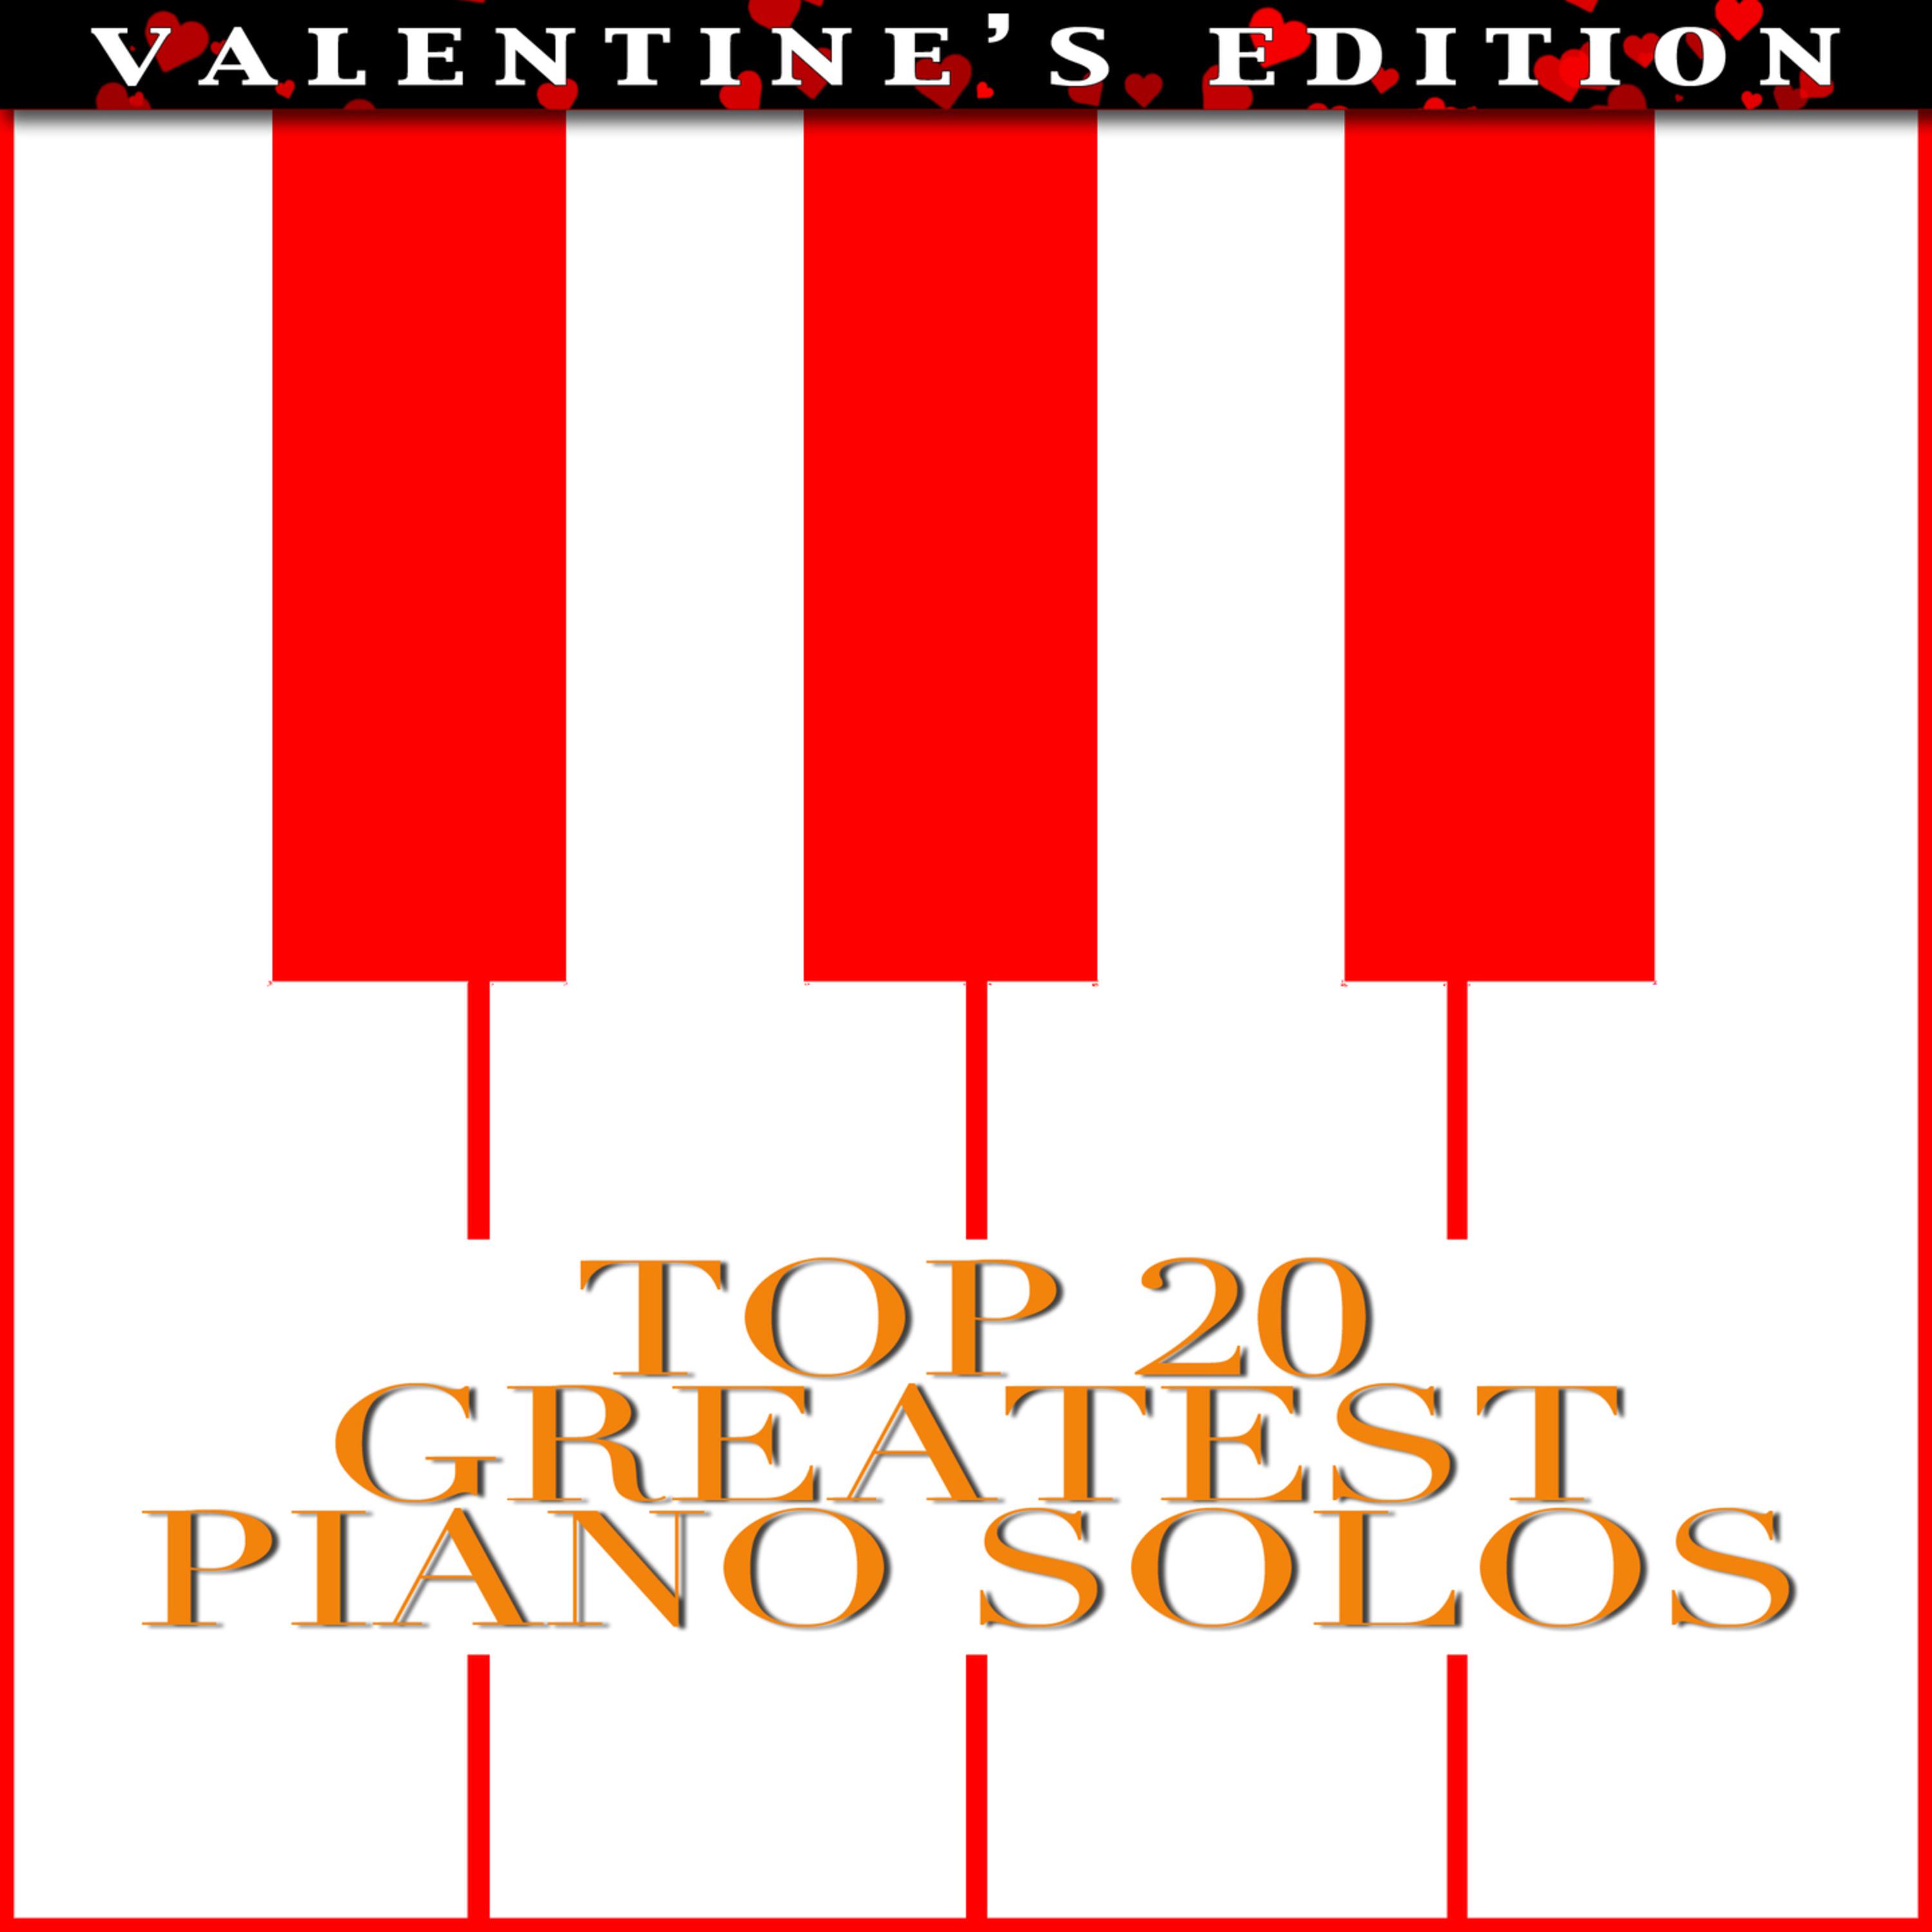 Top 20 Greatest Piano Solo For Valentine's Day